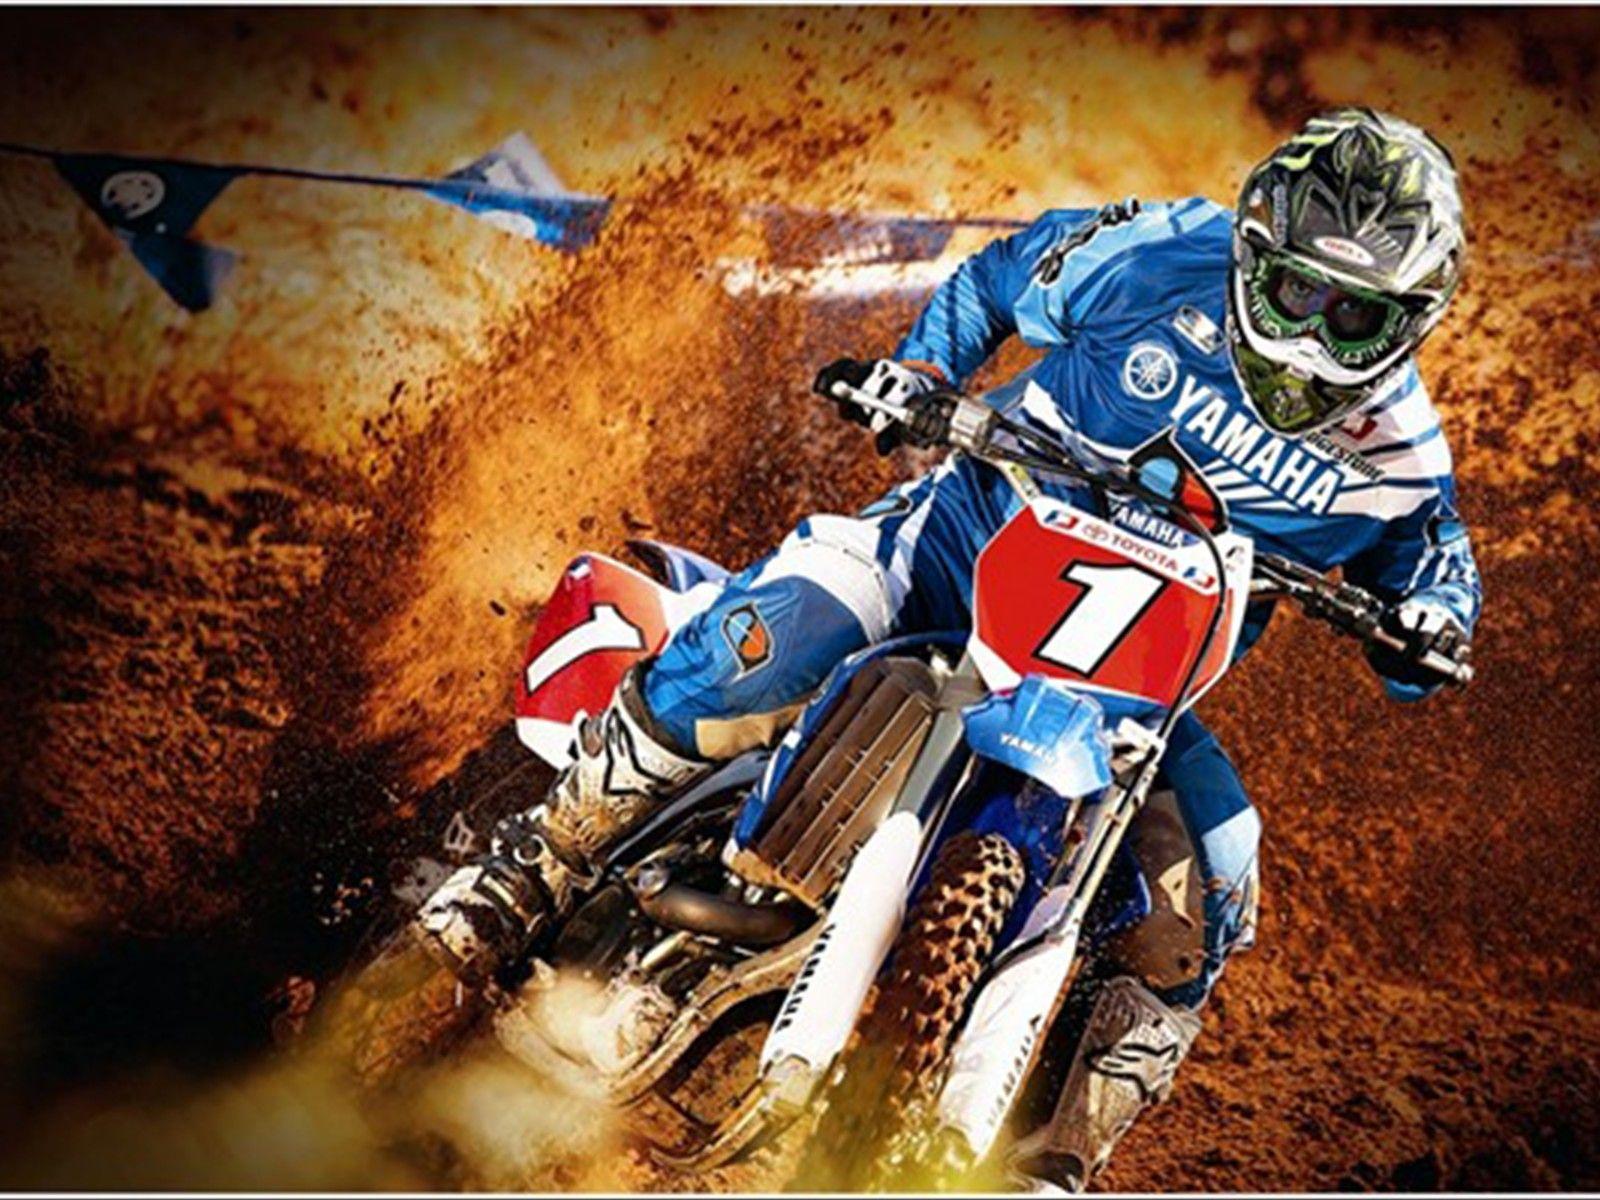 Yamaha Dirt Bike Image For Desktop HD Desktop Wallpaper, Instagram